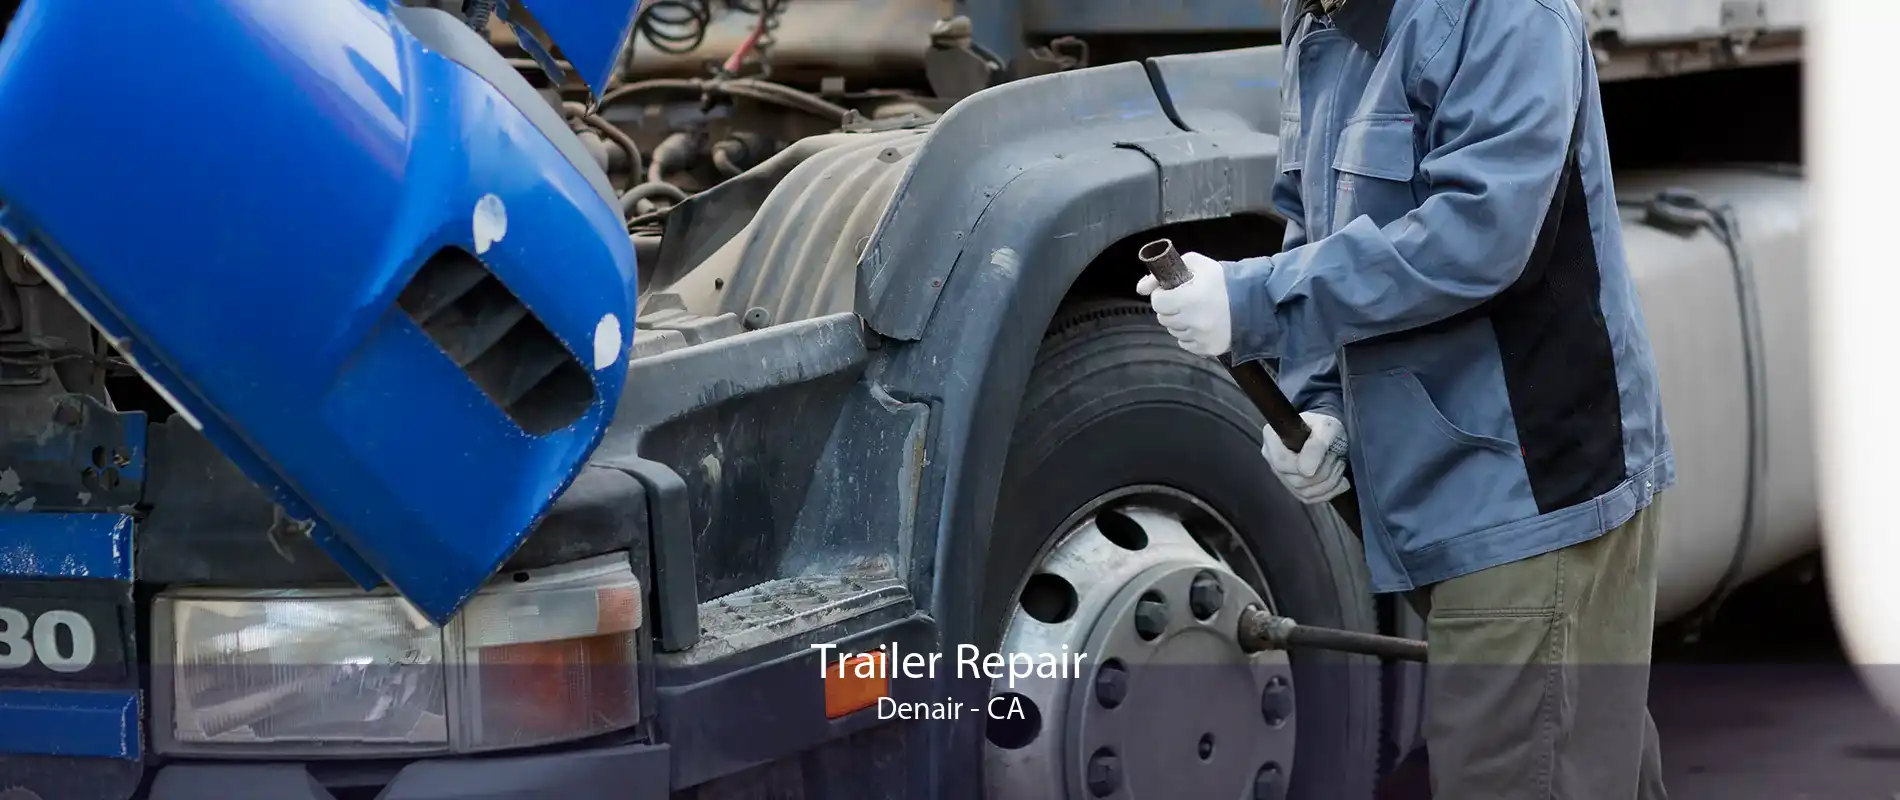 Trailer Repair Denair - CA